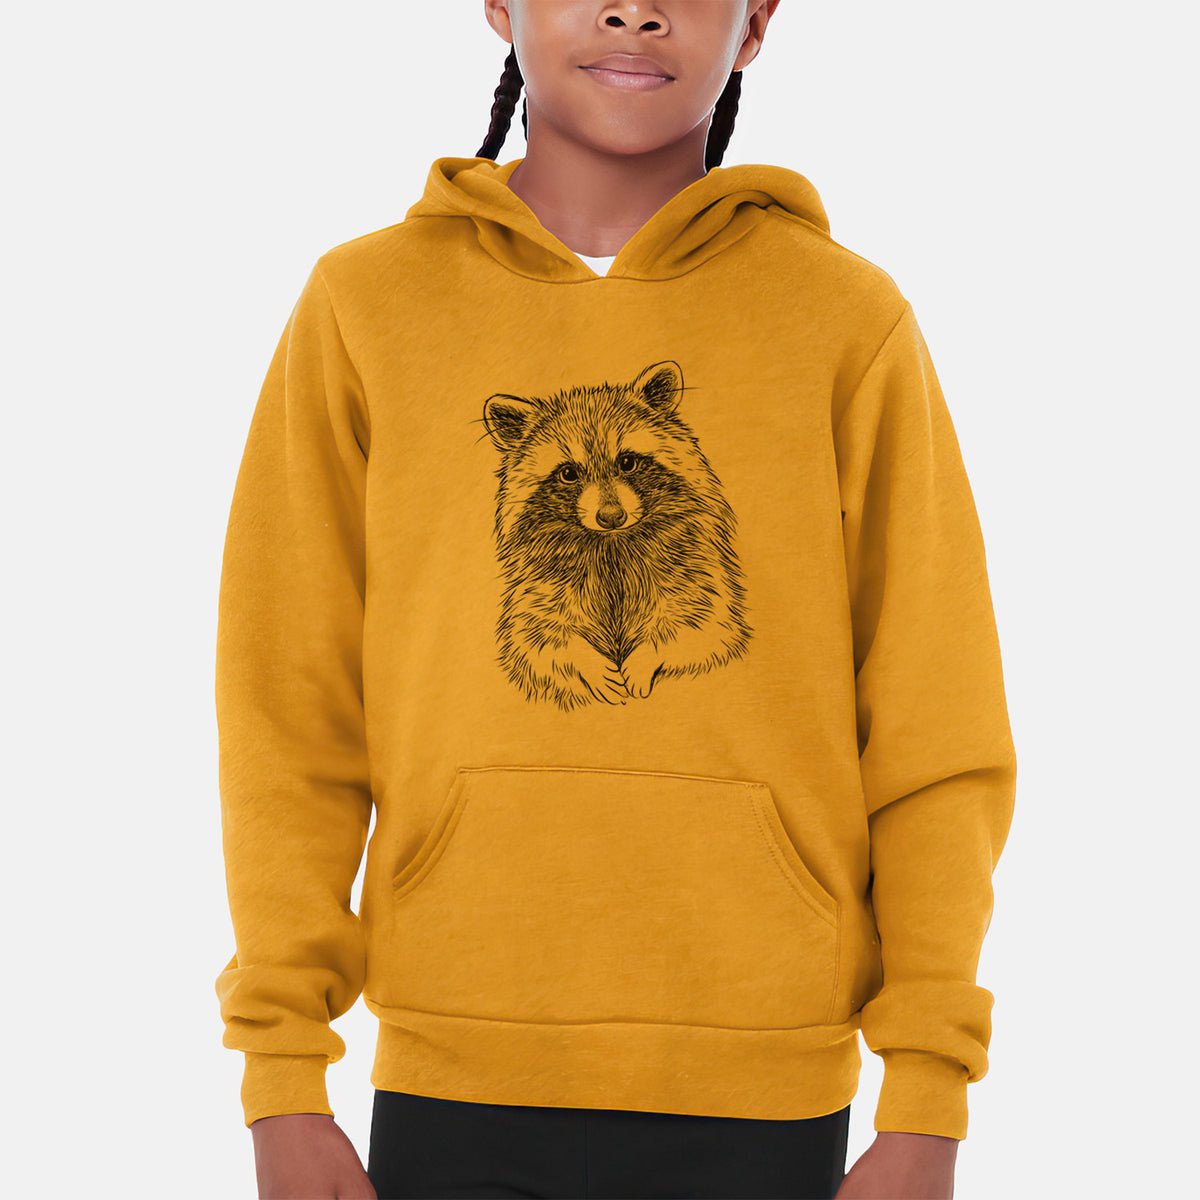 Raccoon - Procyon lotor - Youth Hoodie Sweatshirt